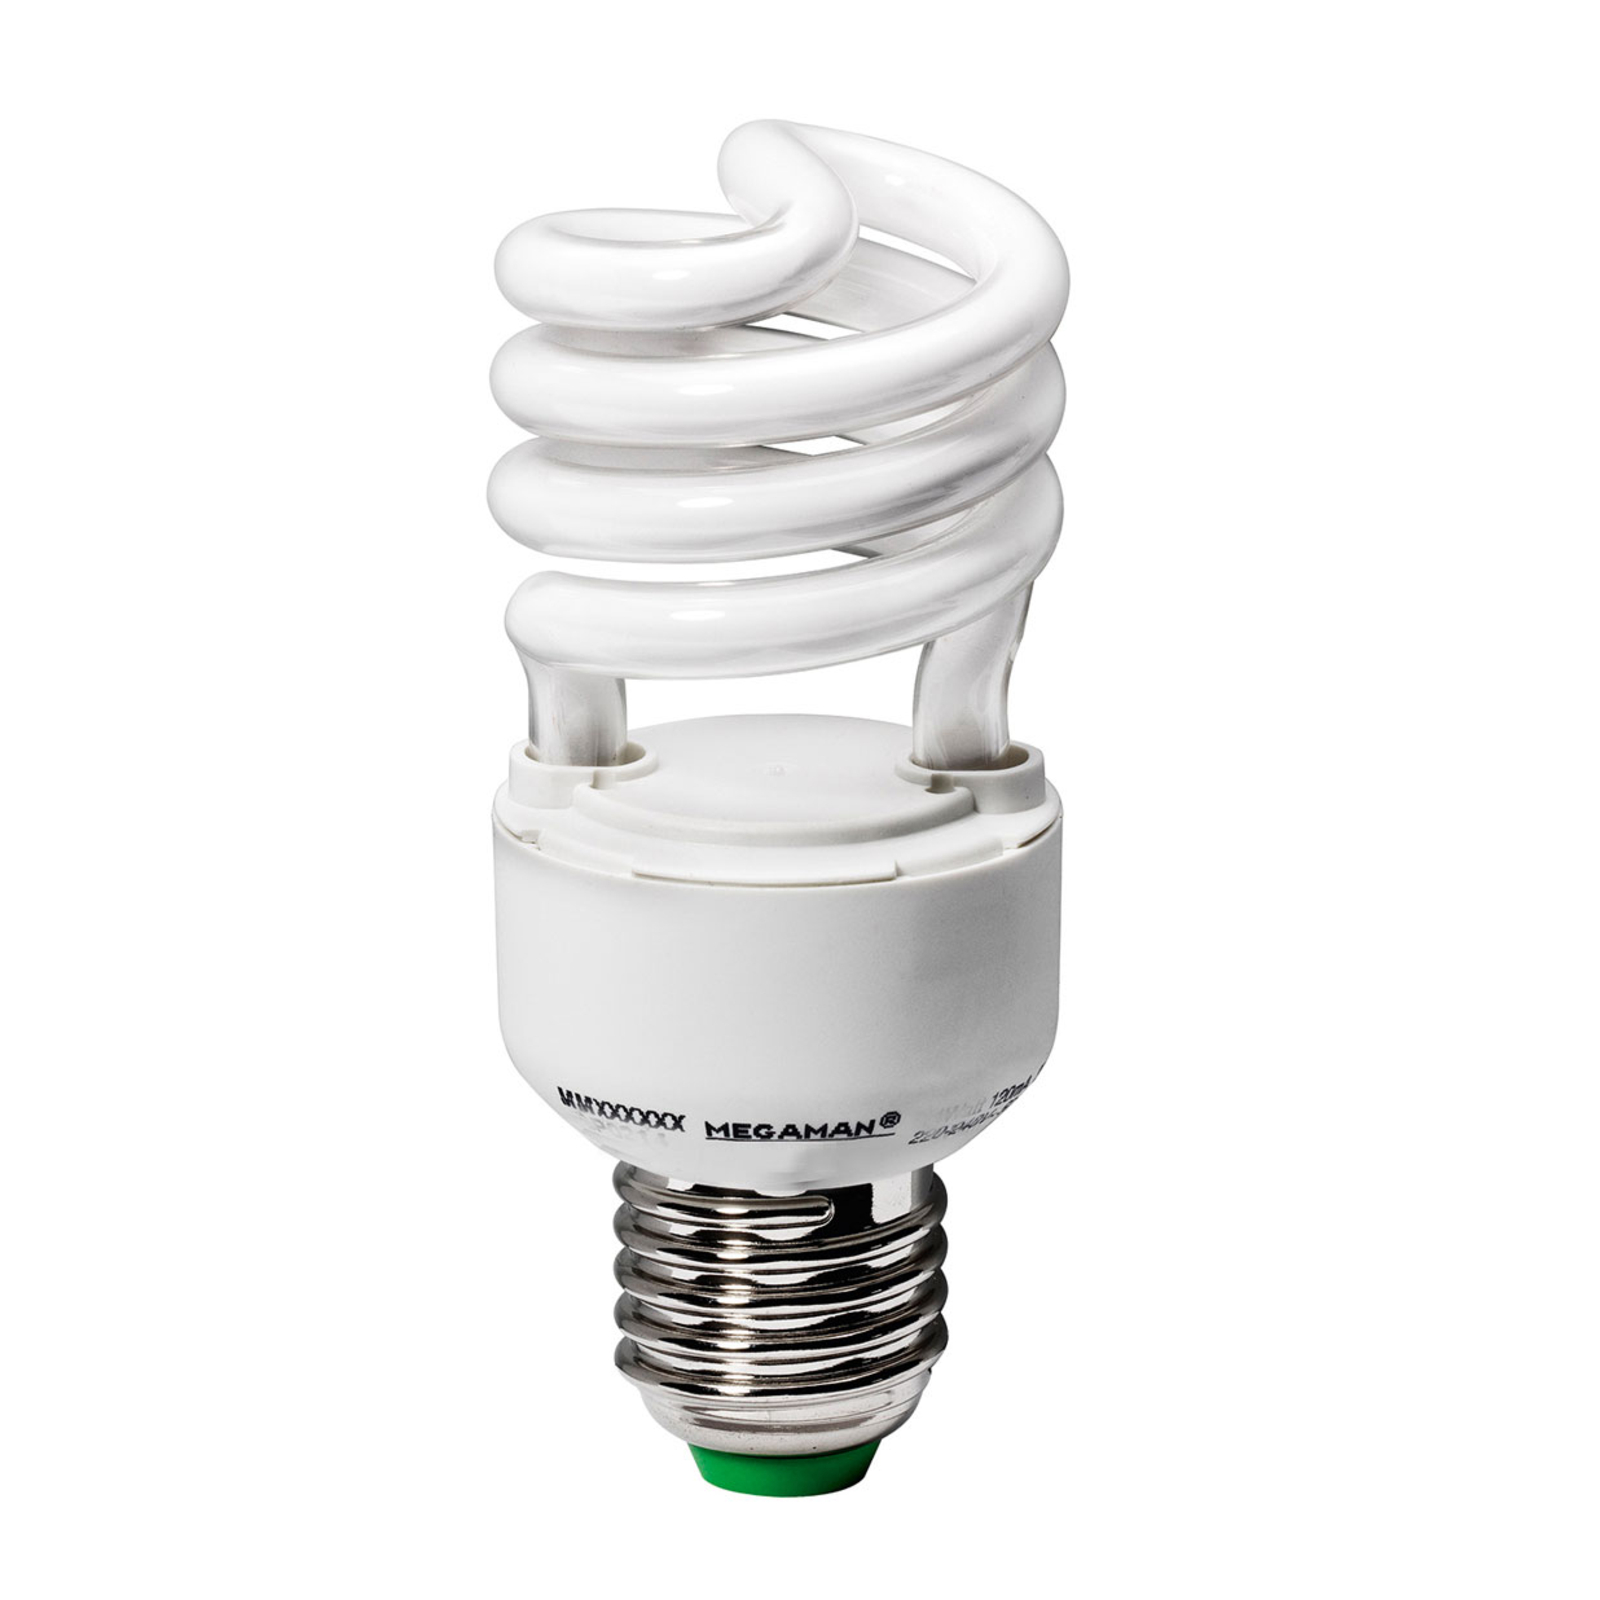 Växtlampa  - E27 14W Växtlampa - Energisparlampa